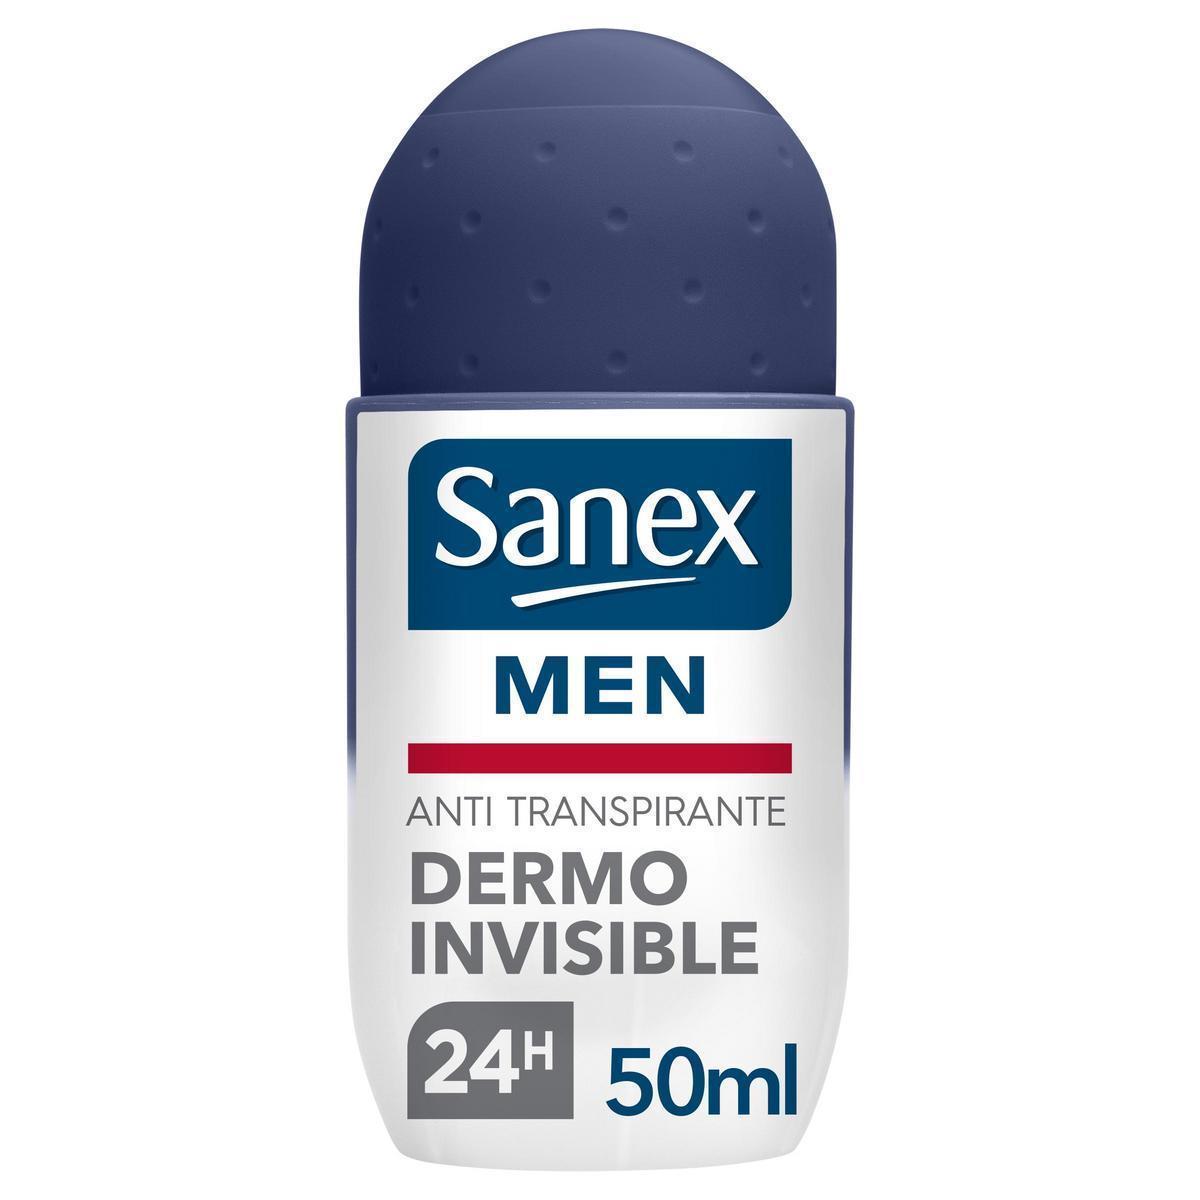 Sanex - Desodorante roll-on para hombre Sanex Men Dermo Invisible 24h antitranspirante 50ml